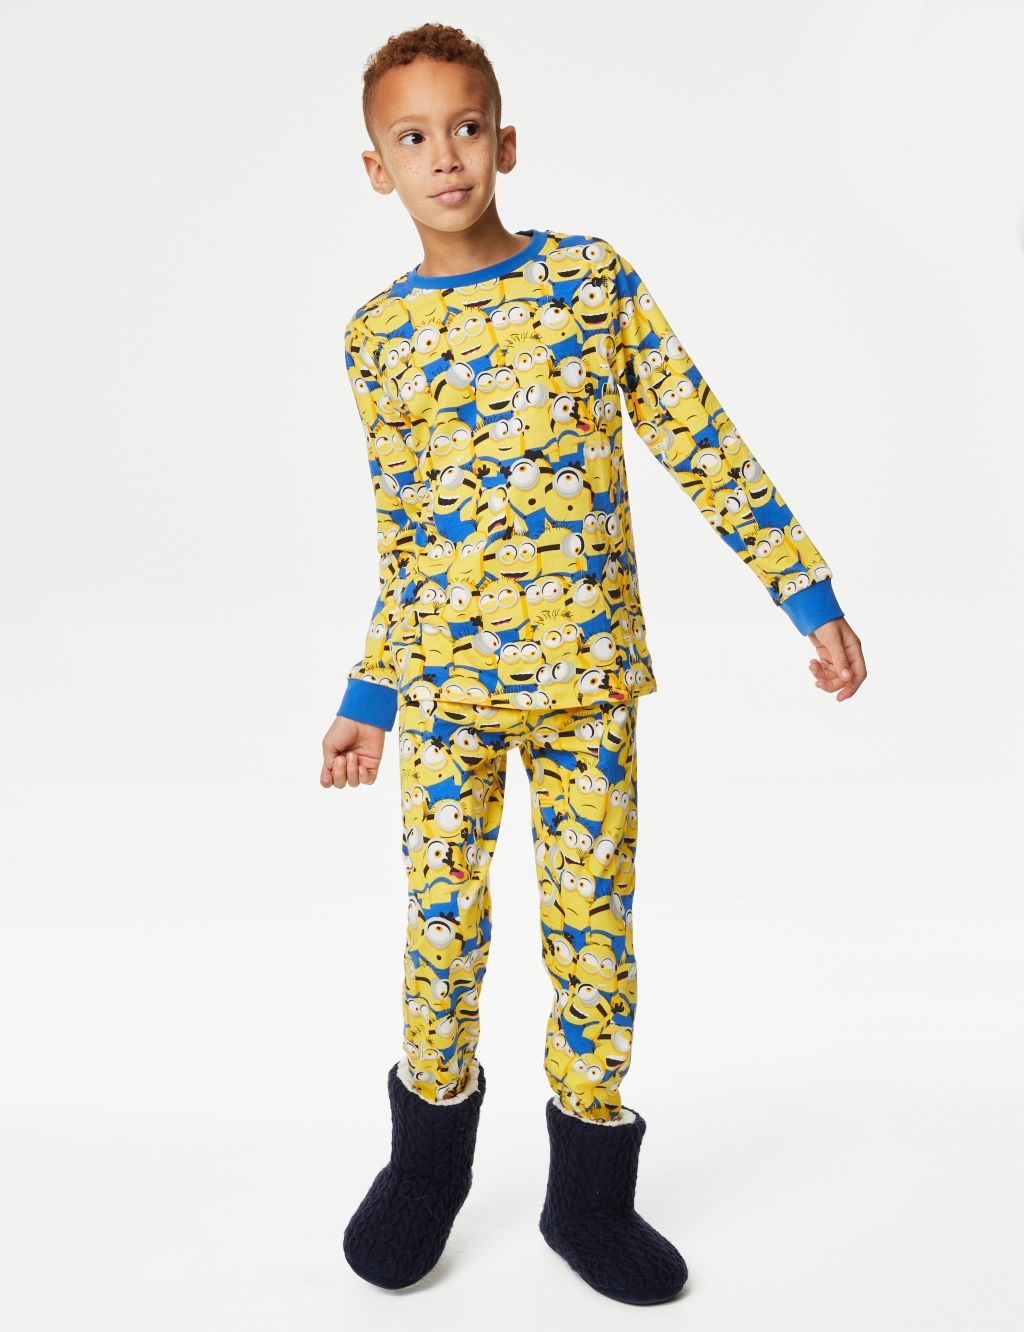 Buy PJ S Children's Boys Winter Heros 3 Pack Vest and Pants